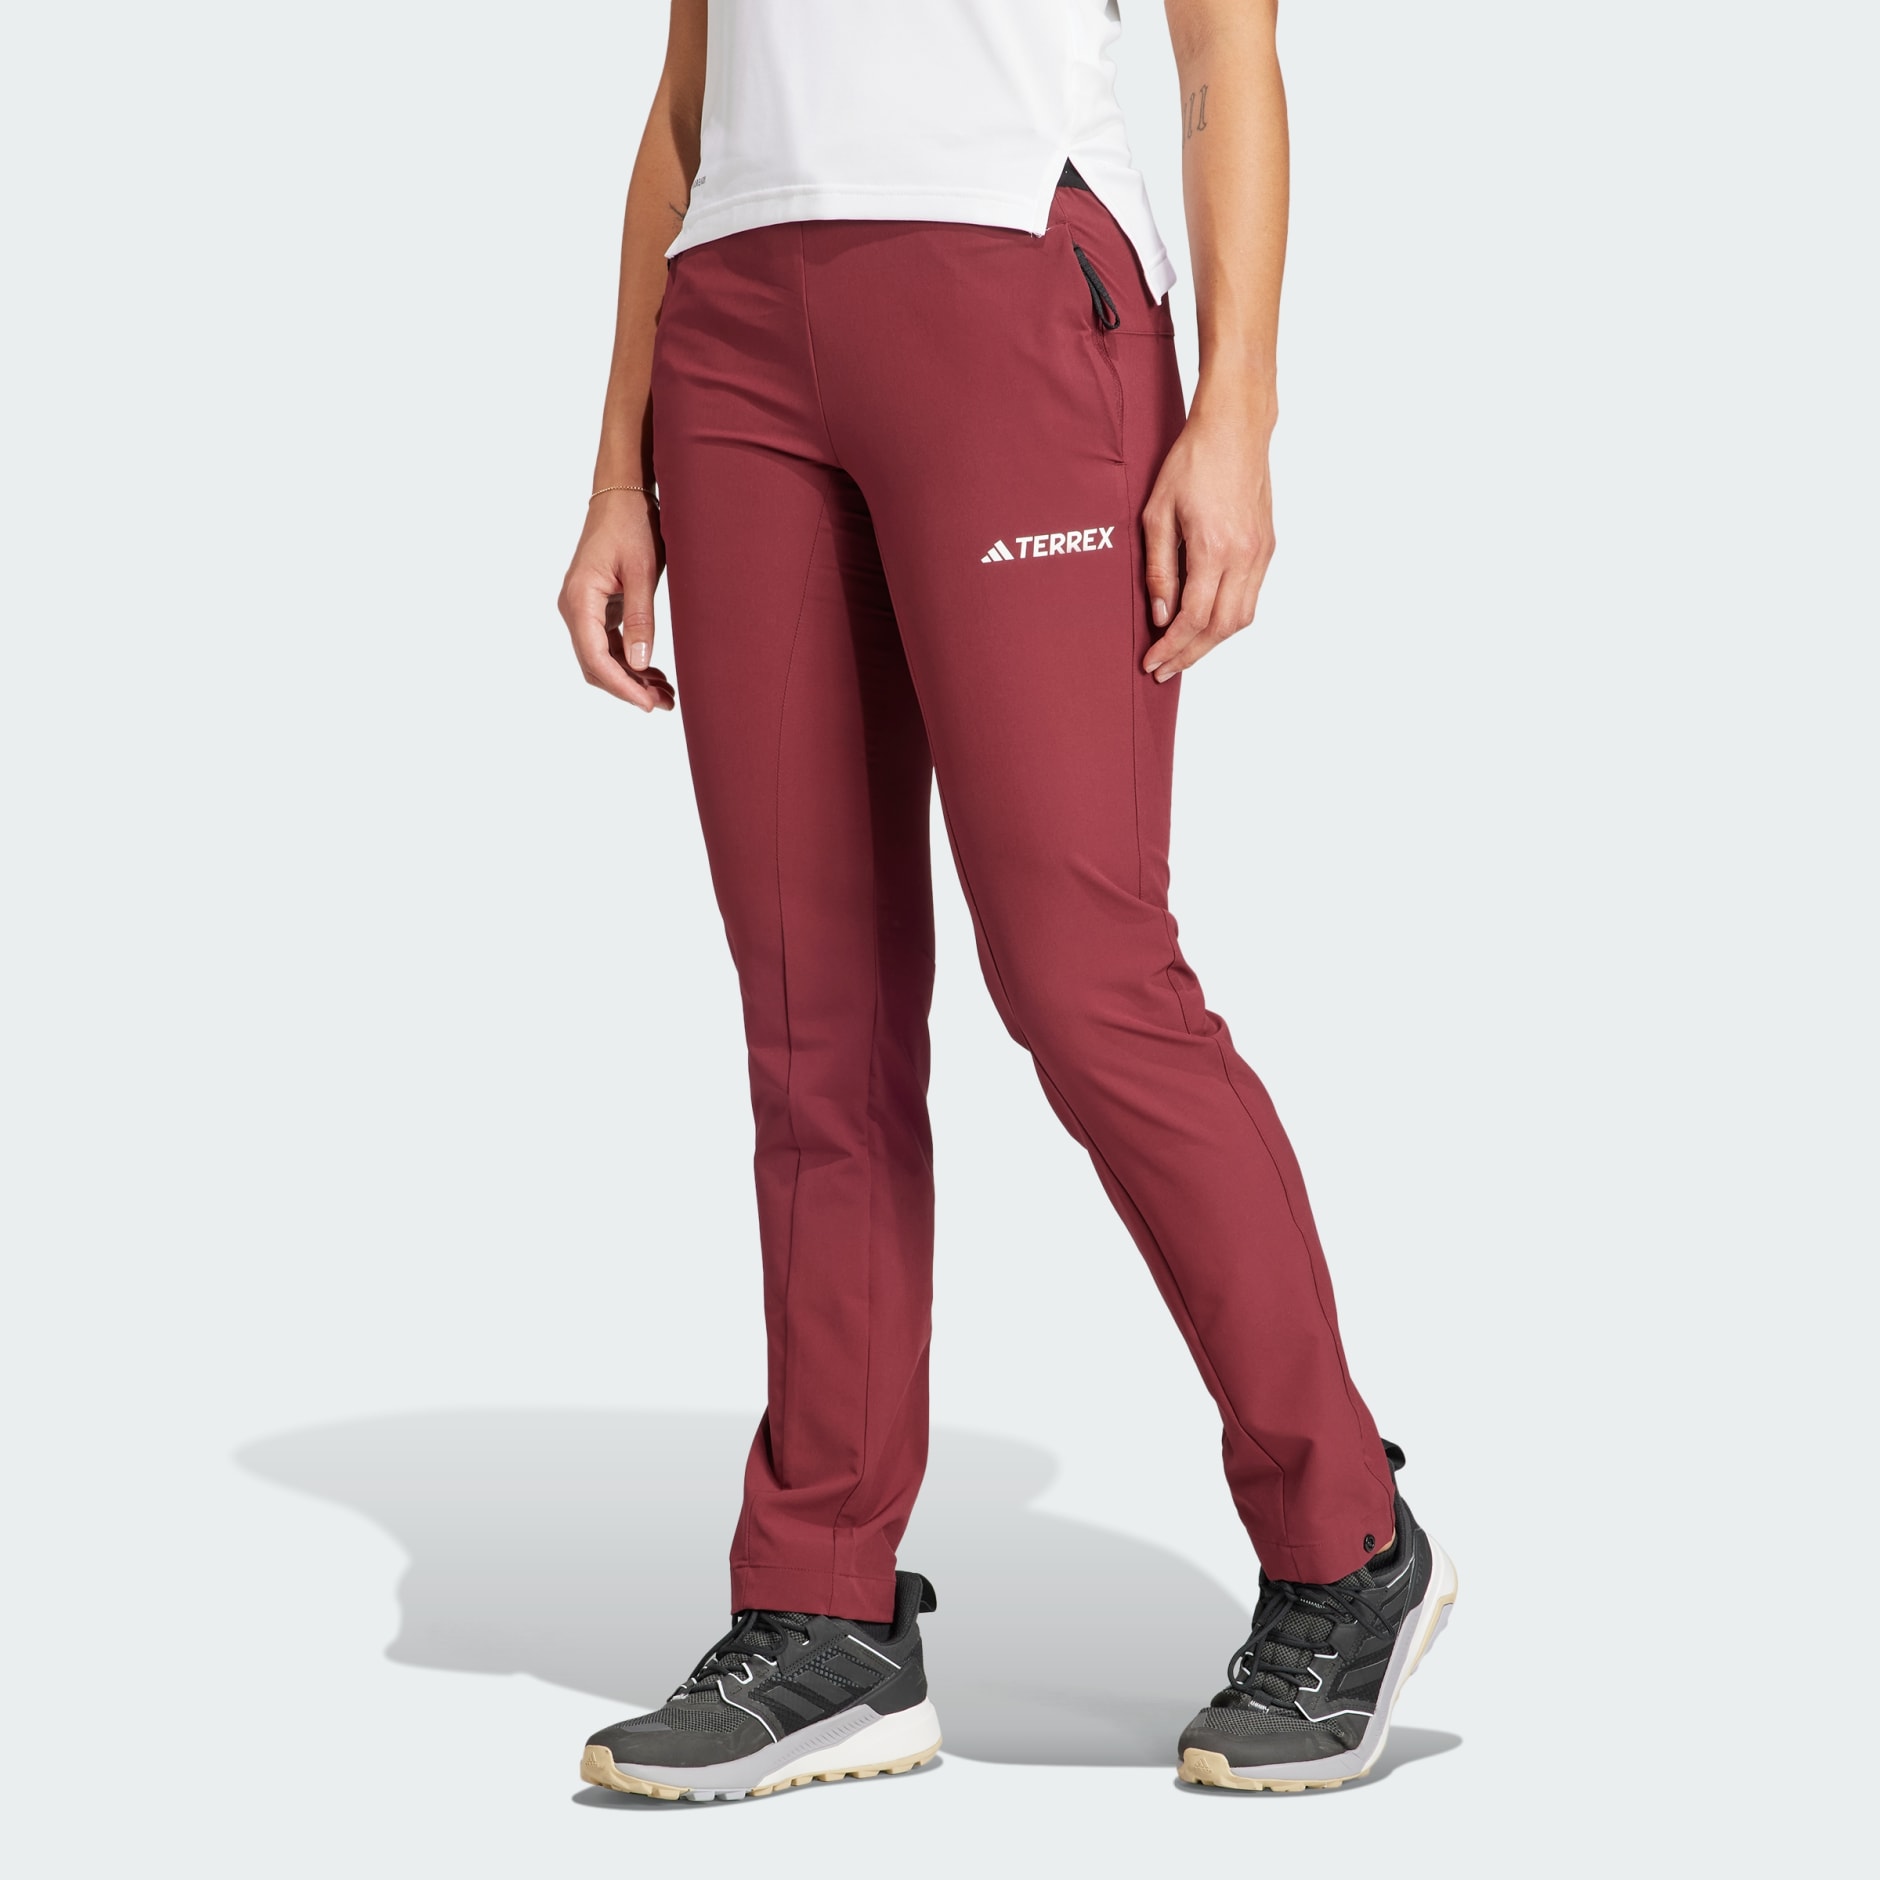 Women's Clothing - Terrex Liteflex Hiking Pants - Burgundy